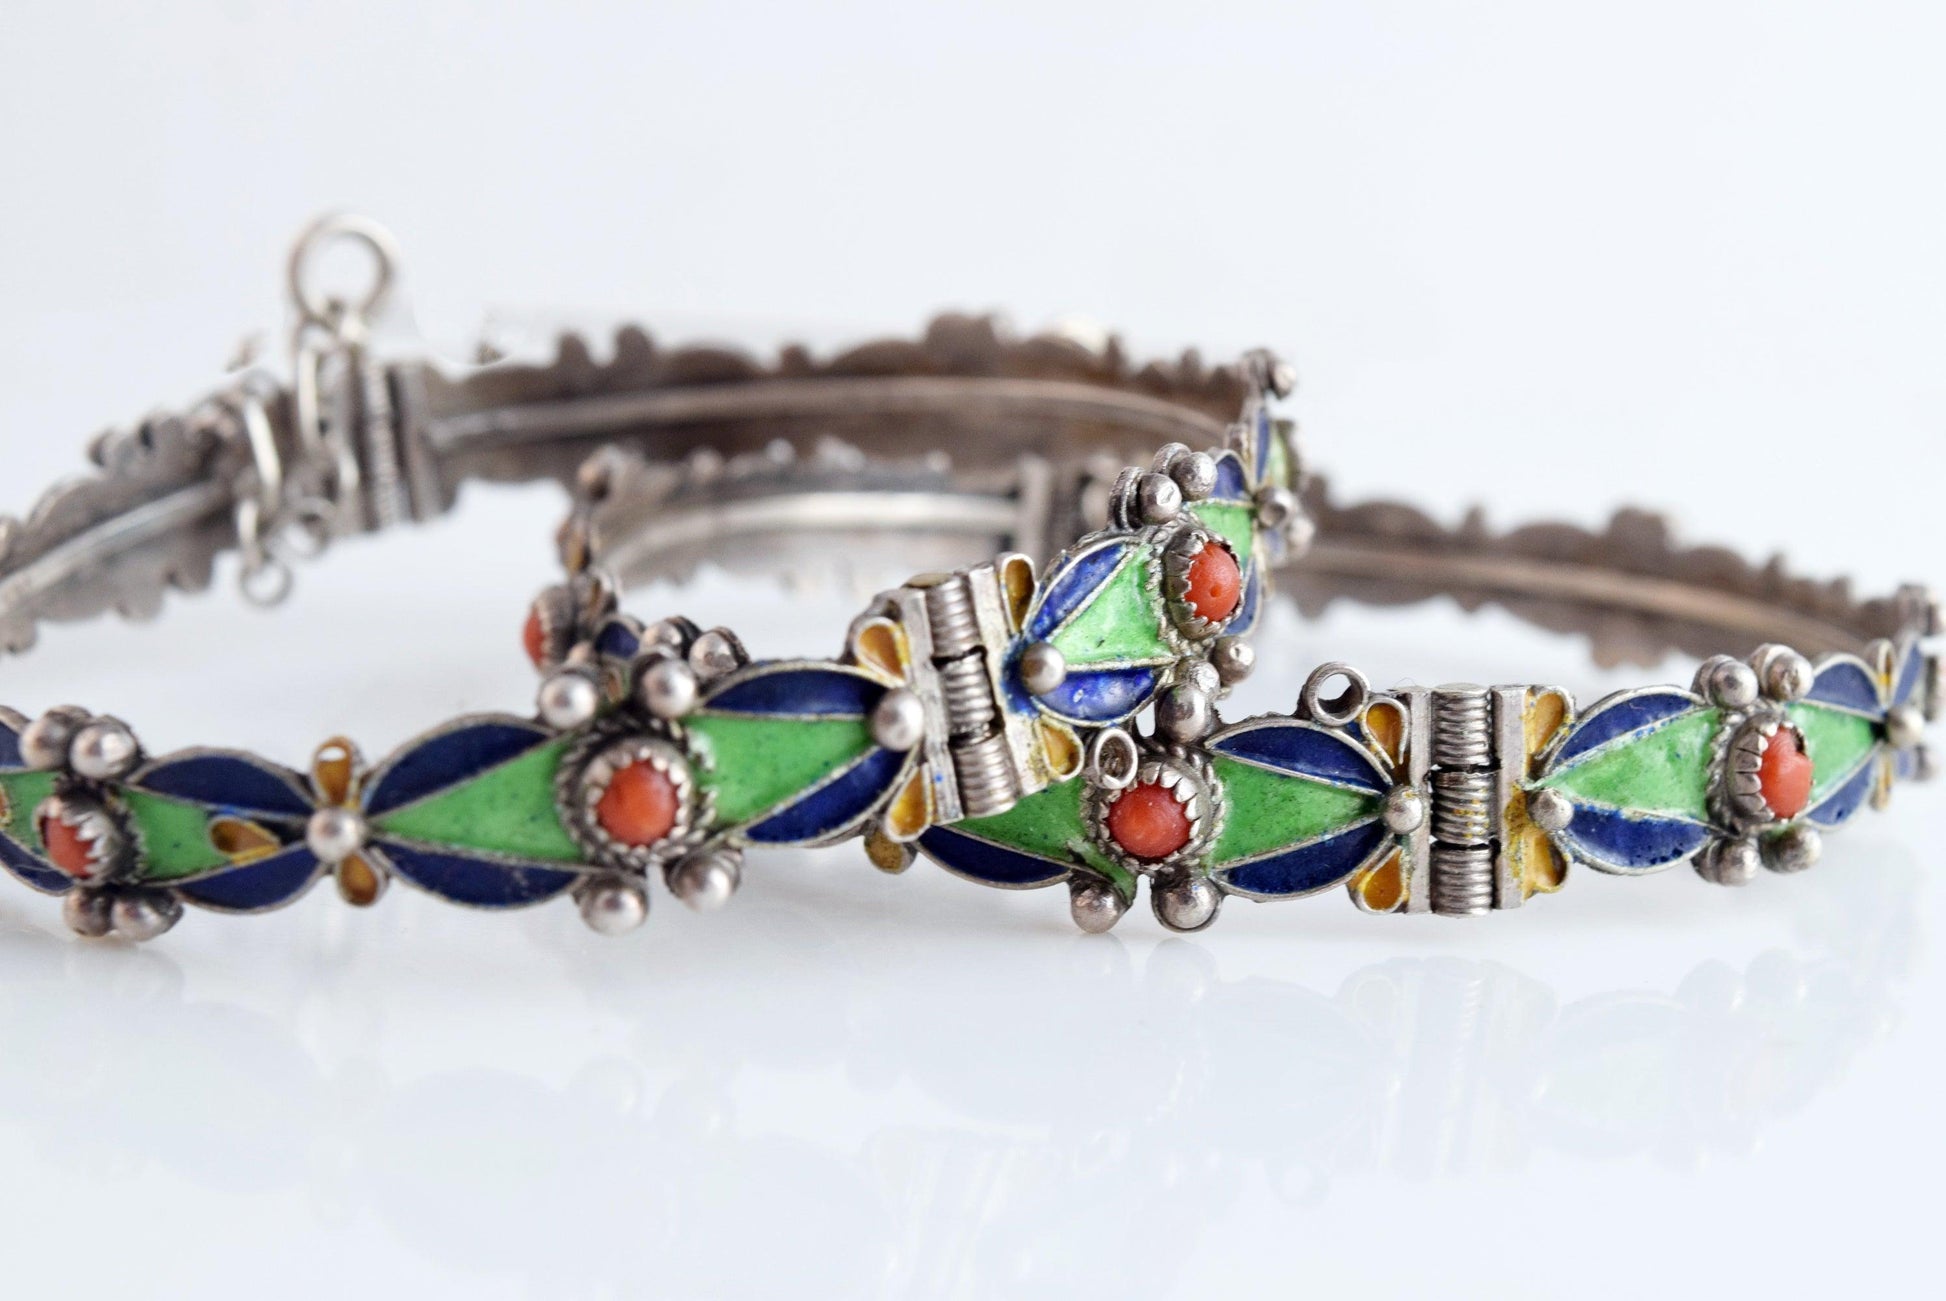 Berber enamel bracelets